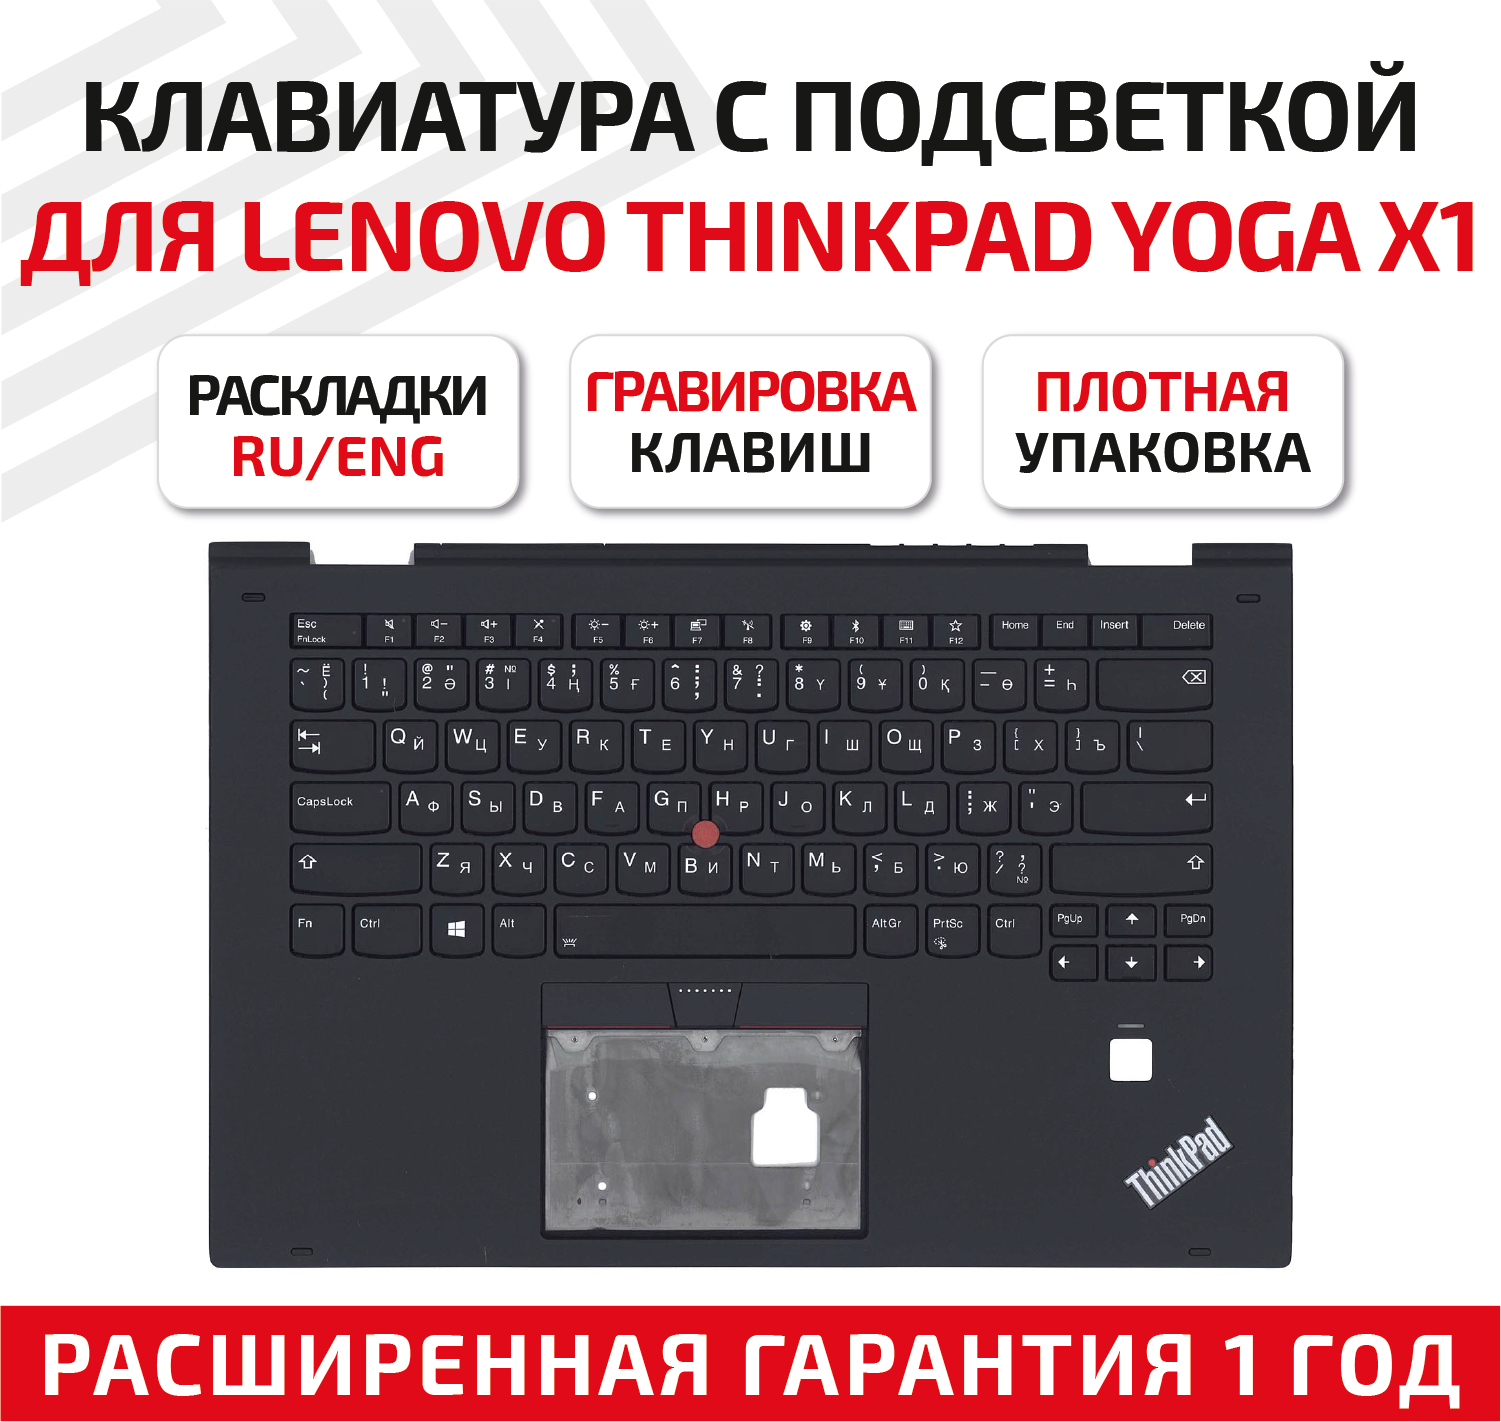 Клавиатура (keyboard) RVWV-84US для ноутбука Lenovo ThinkPad Yoga X1 2nd Gen 2017, черная с подсветкой топ-панель